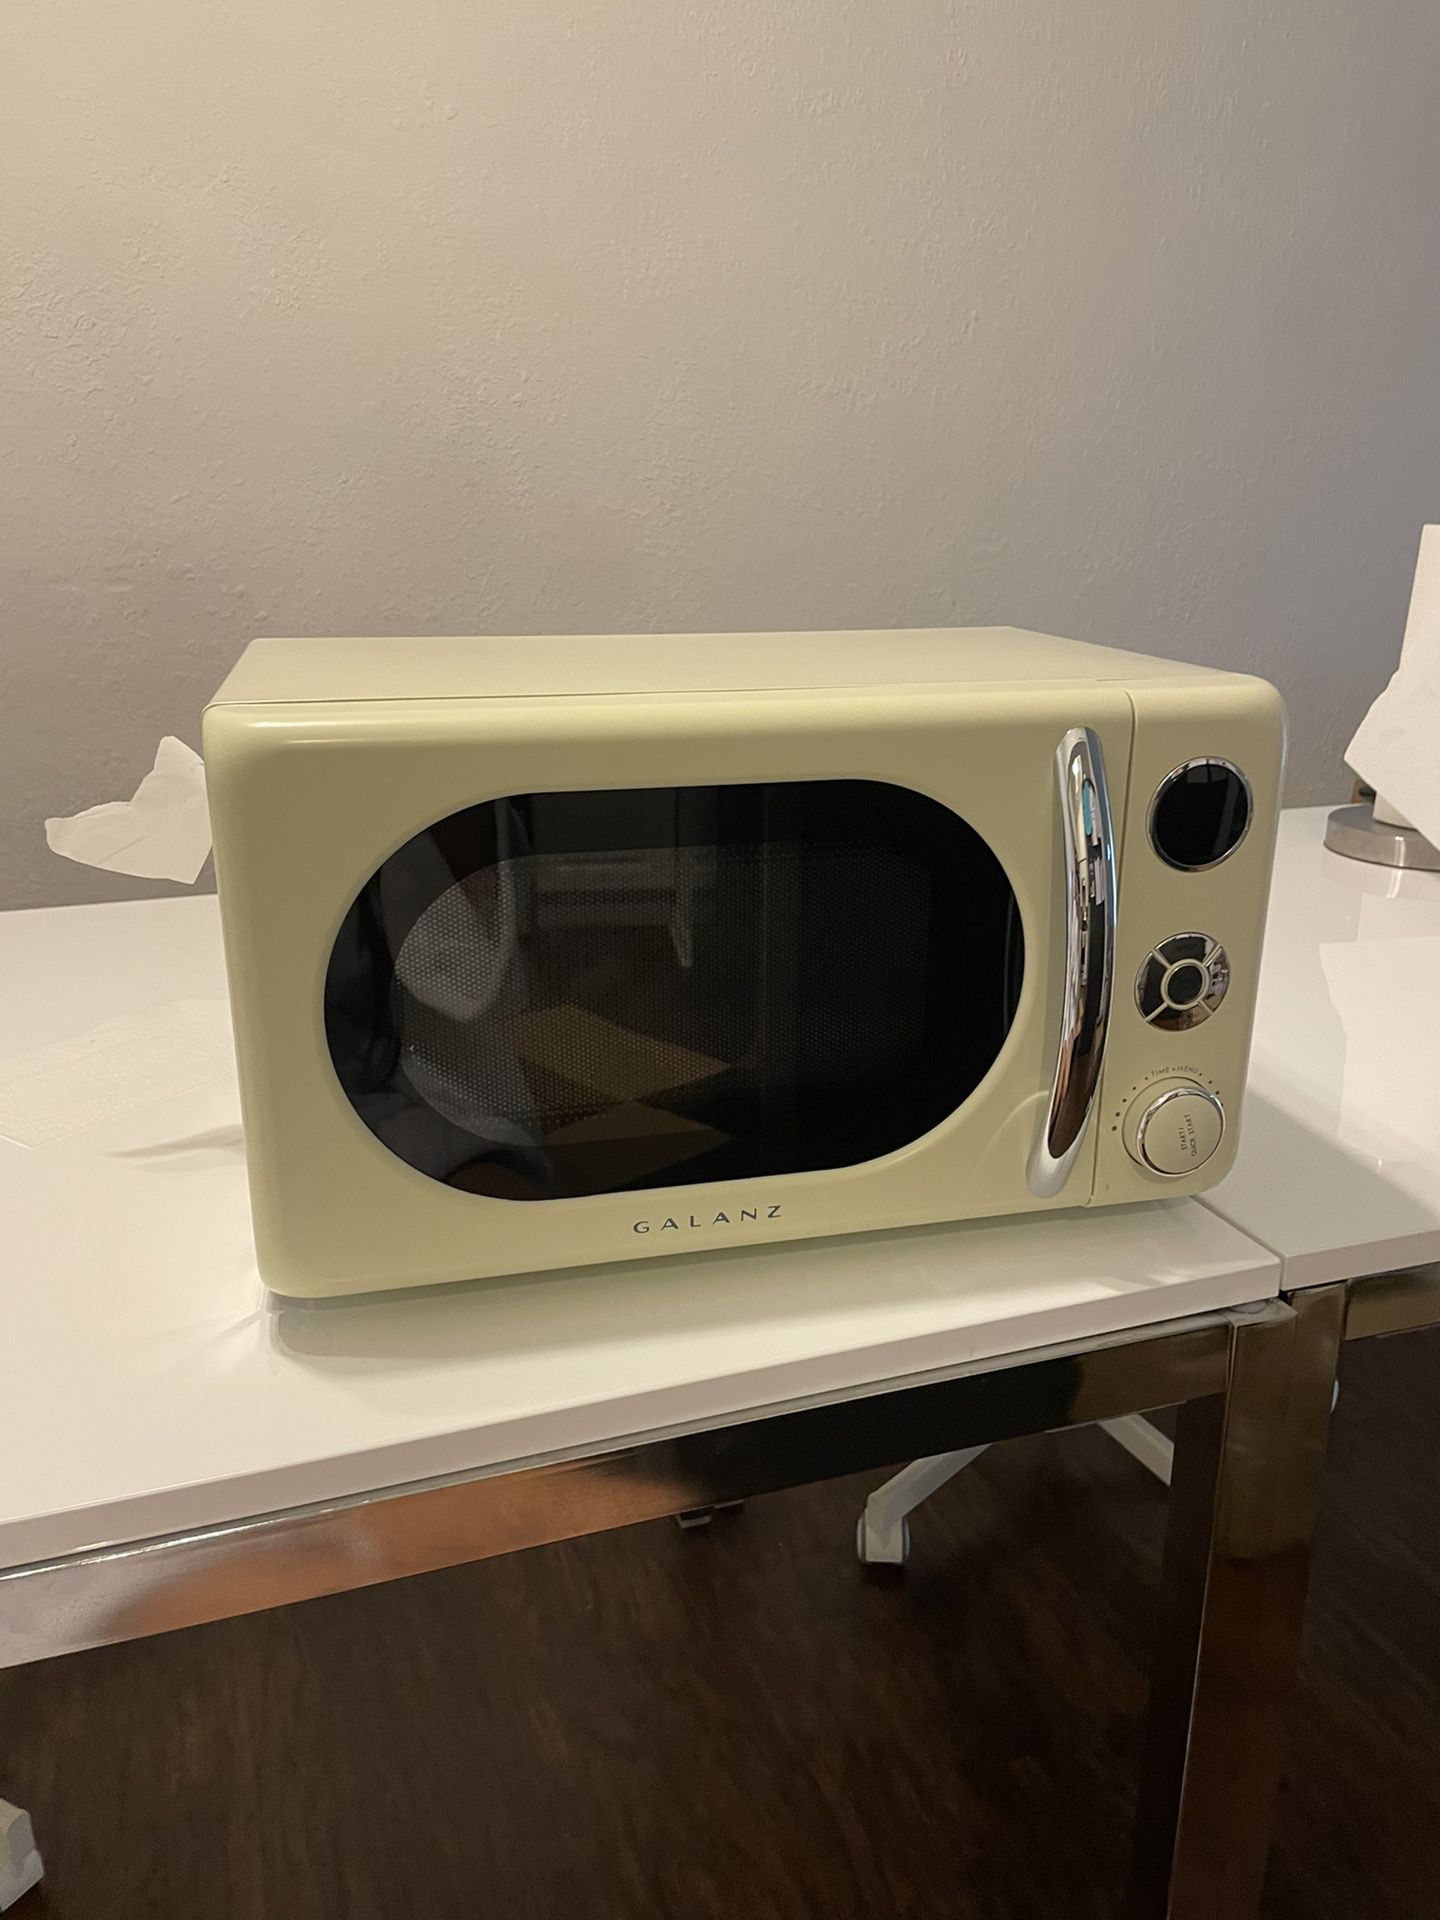 0.7 cu. ft. Countertop Retro Microwave Oven